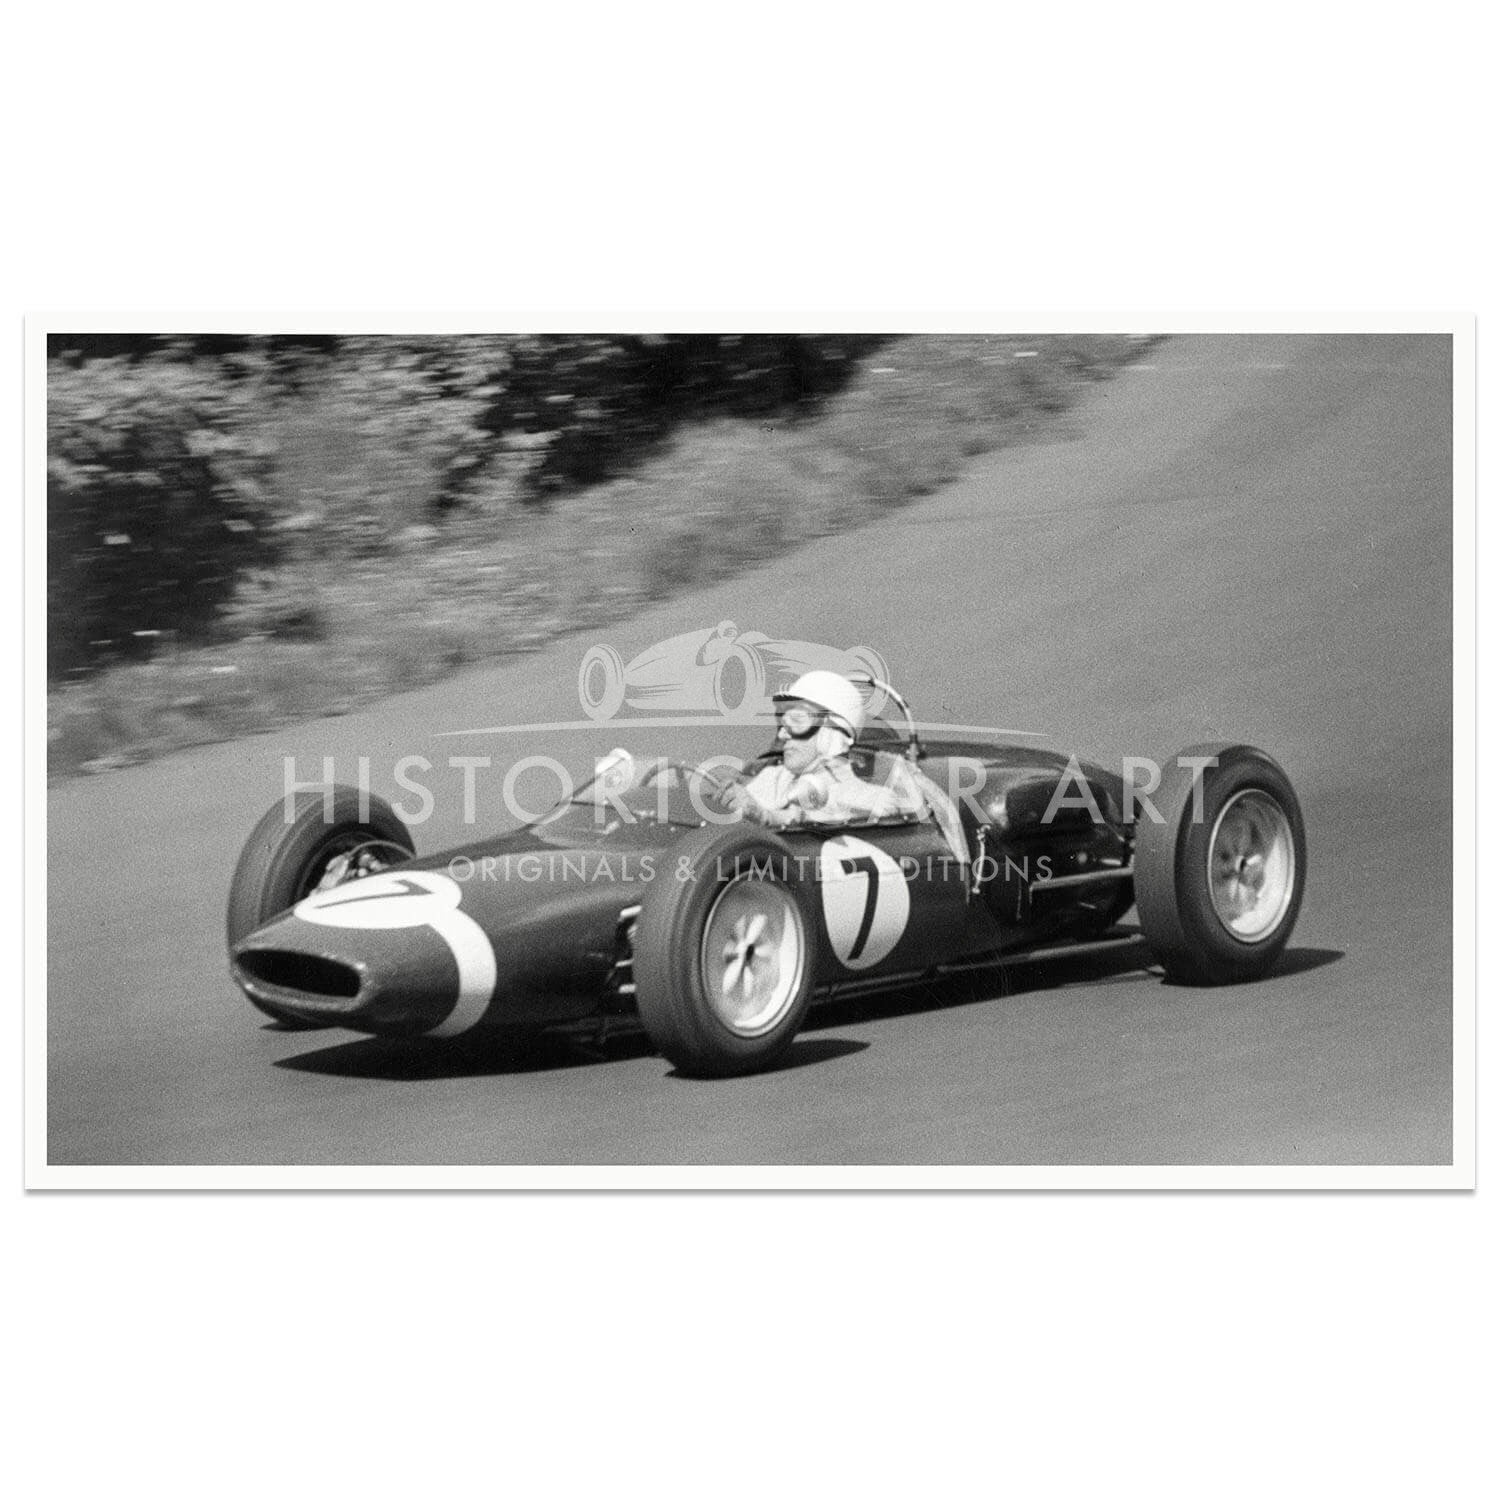 1961 German Grand Prix | Stirling Moss | Lotus 18/21 | Photograph